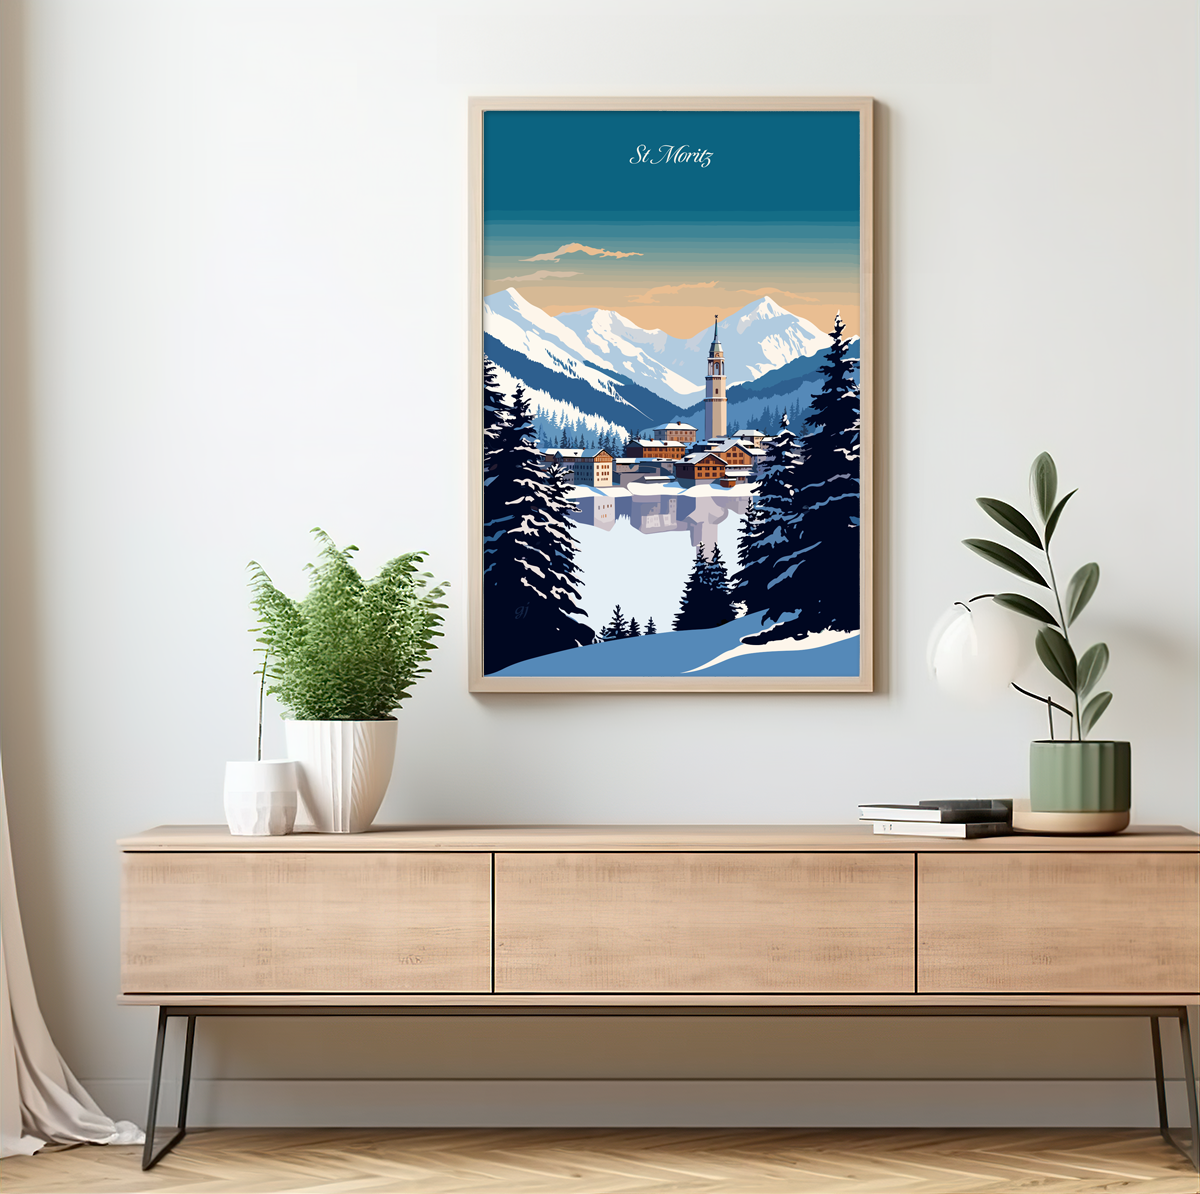 St-Moritz poster by bon voyage design